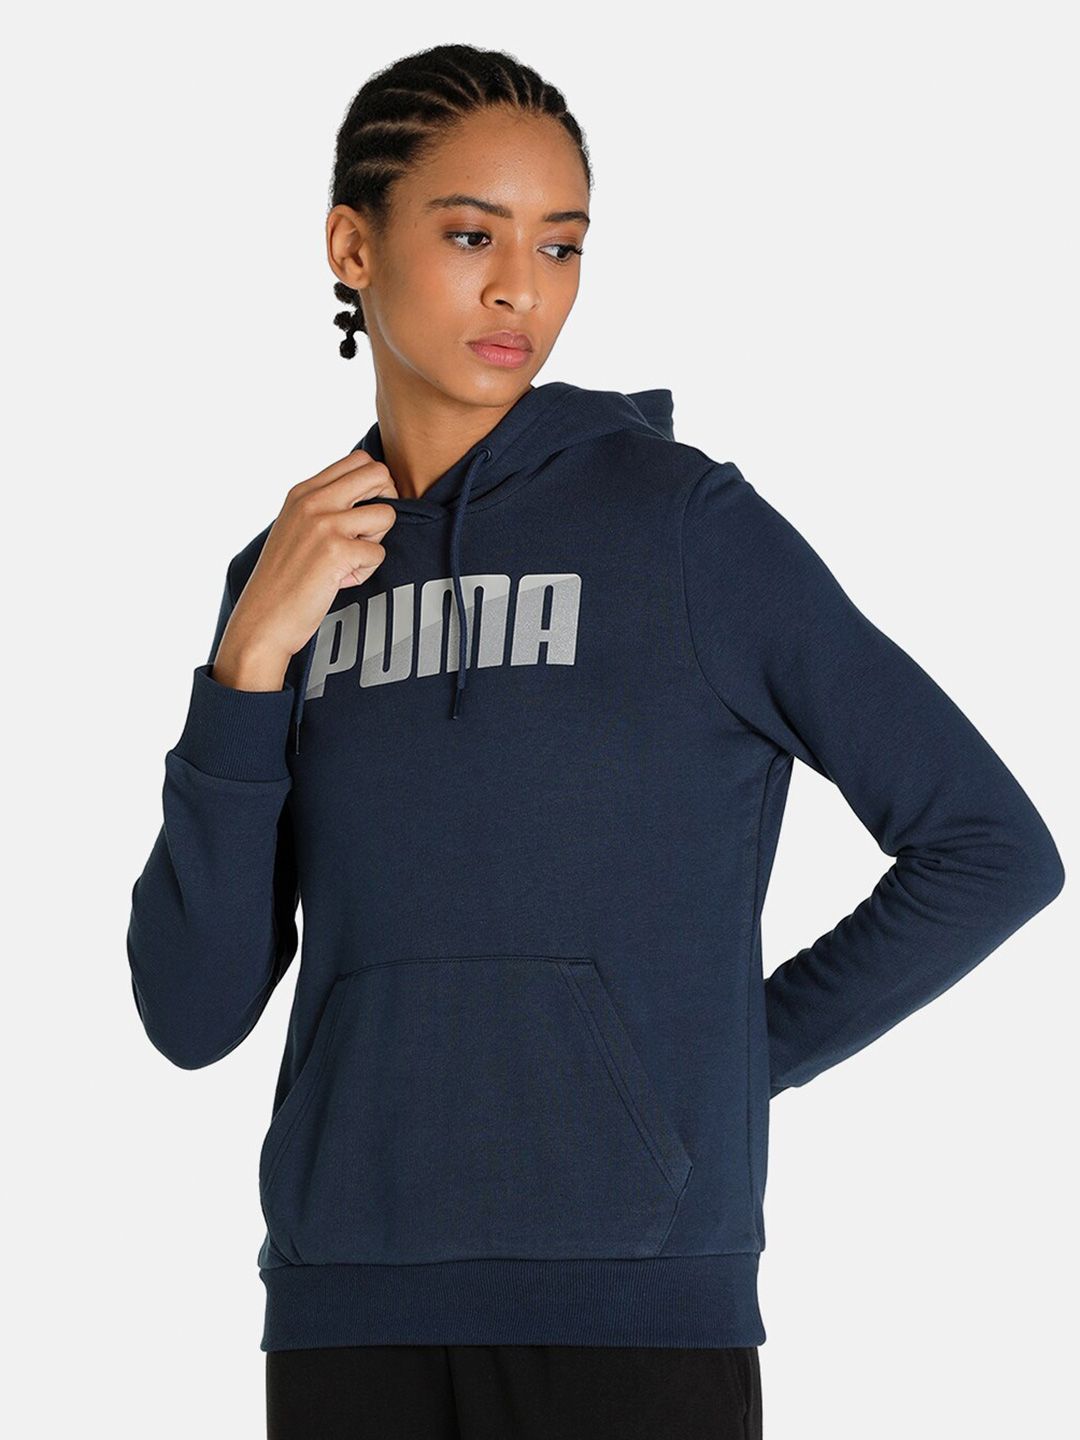 Puma Women Blue Hooded Sweatshirt Price in India